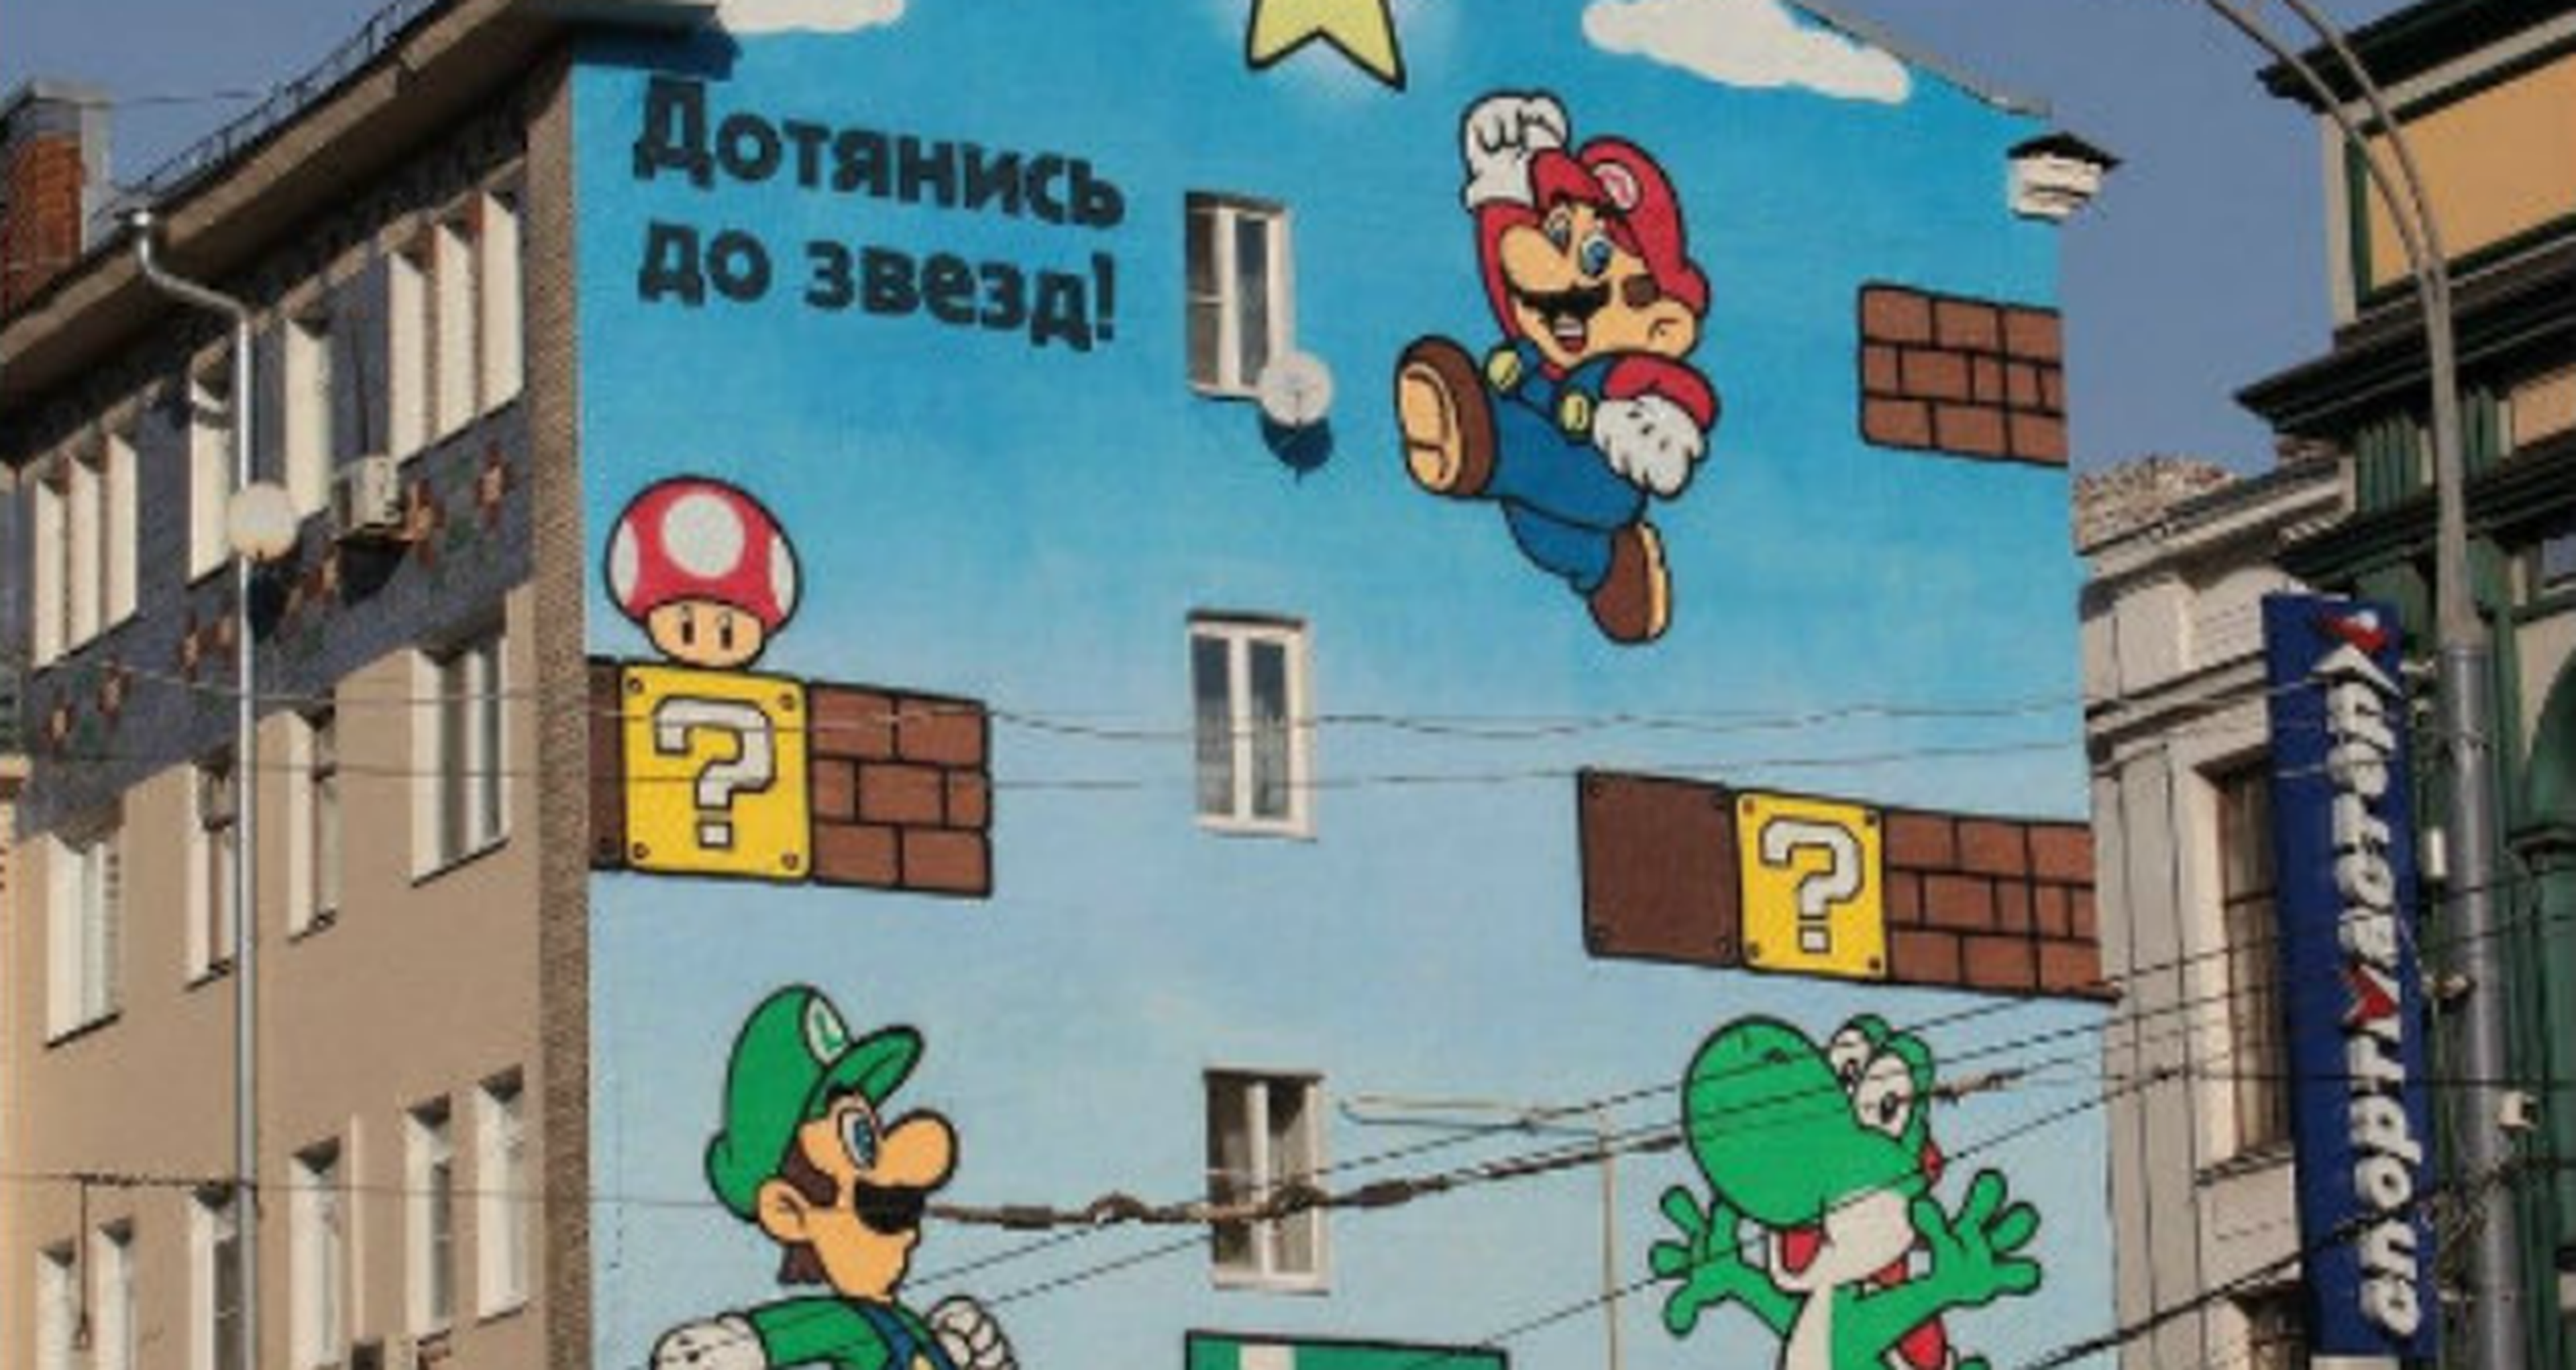 Un mural de Mario Bros en Crimea a favor de la paz